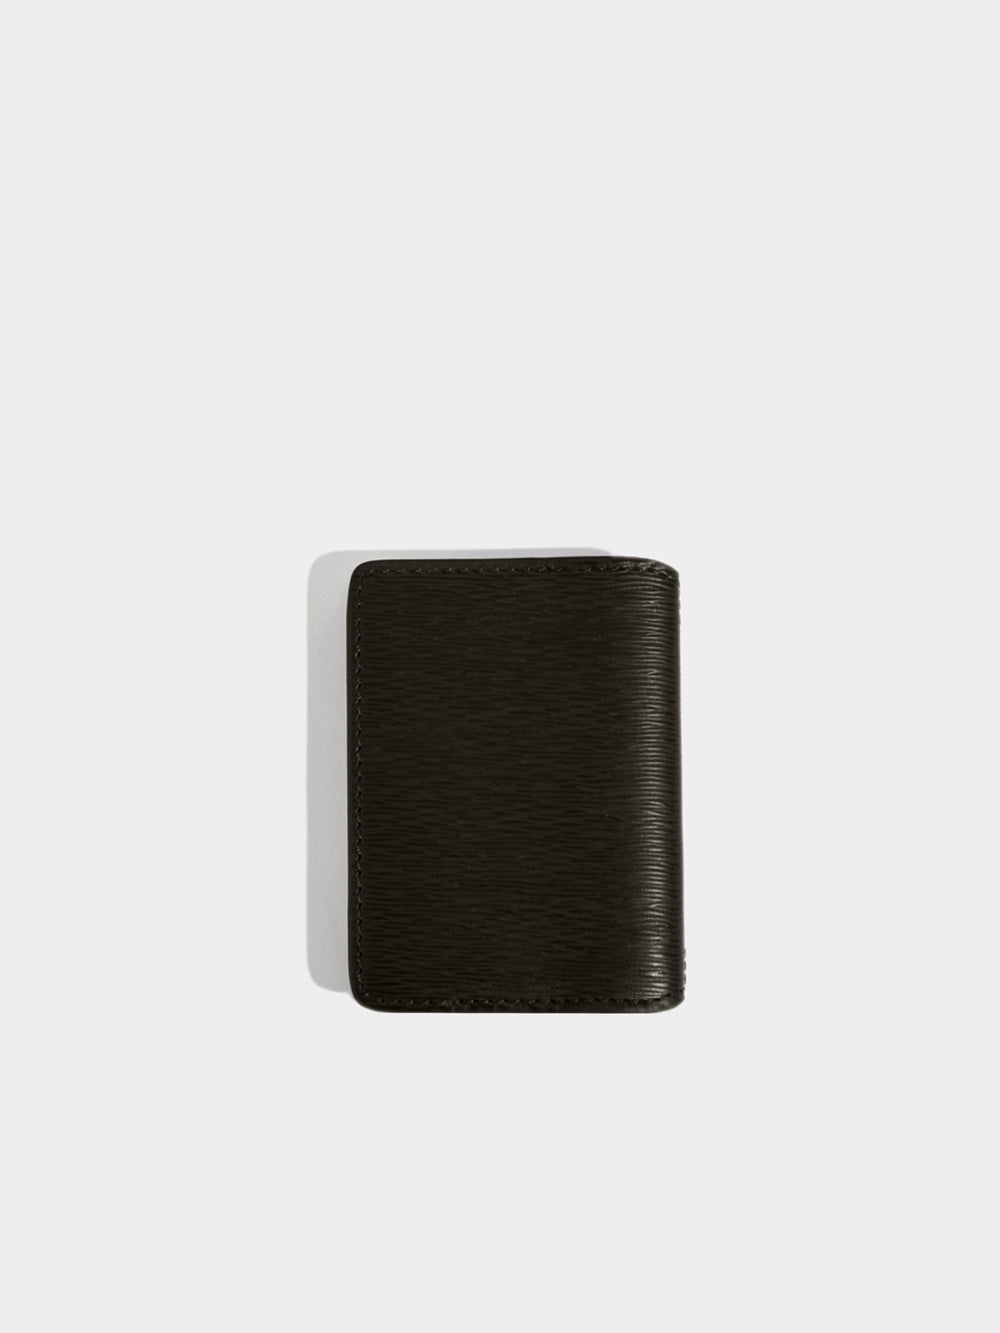 Louis Vuitton Taiga Leather Passport Covering